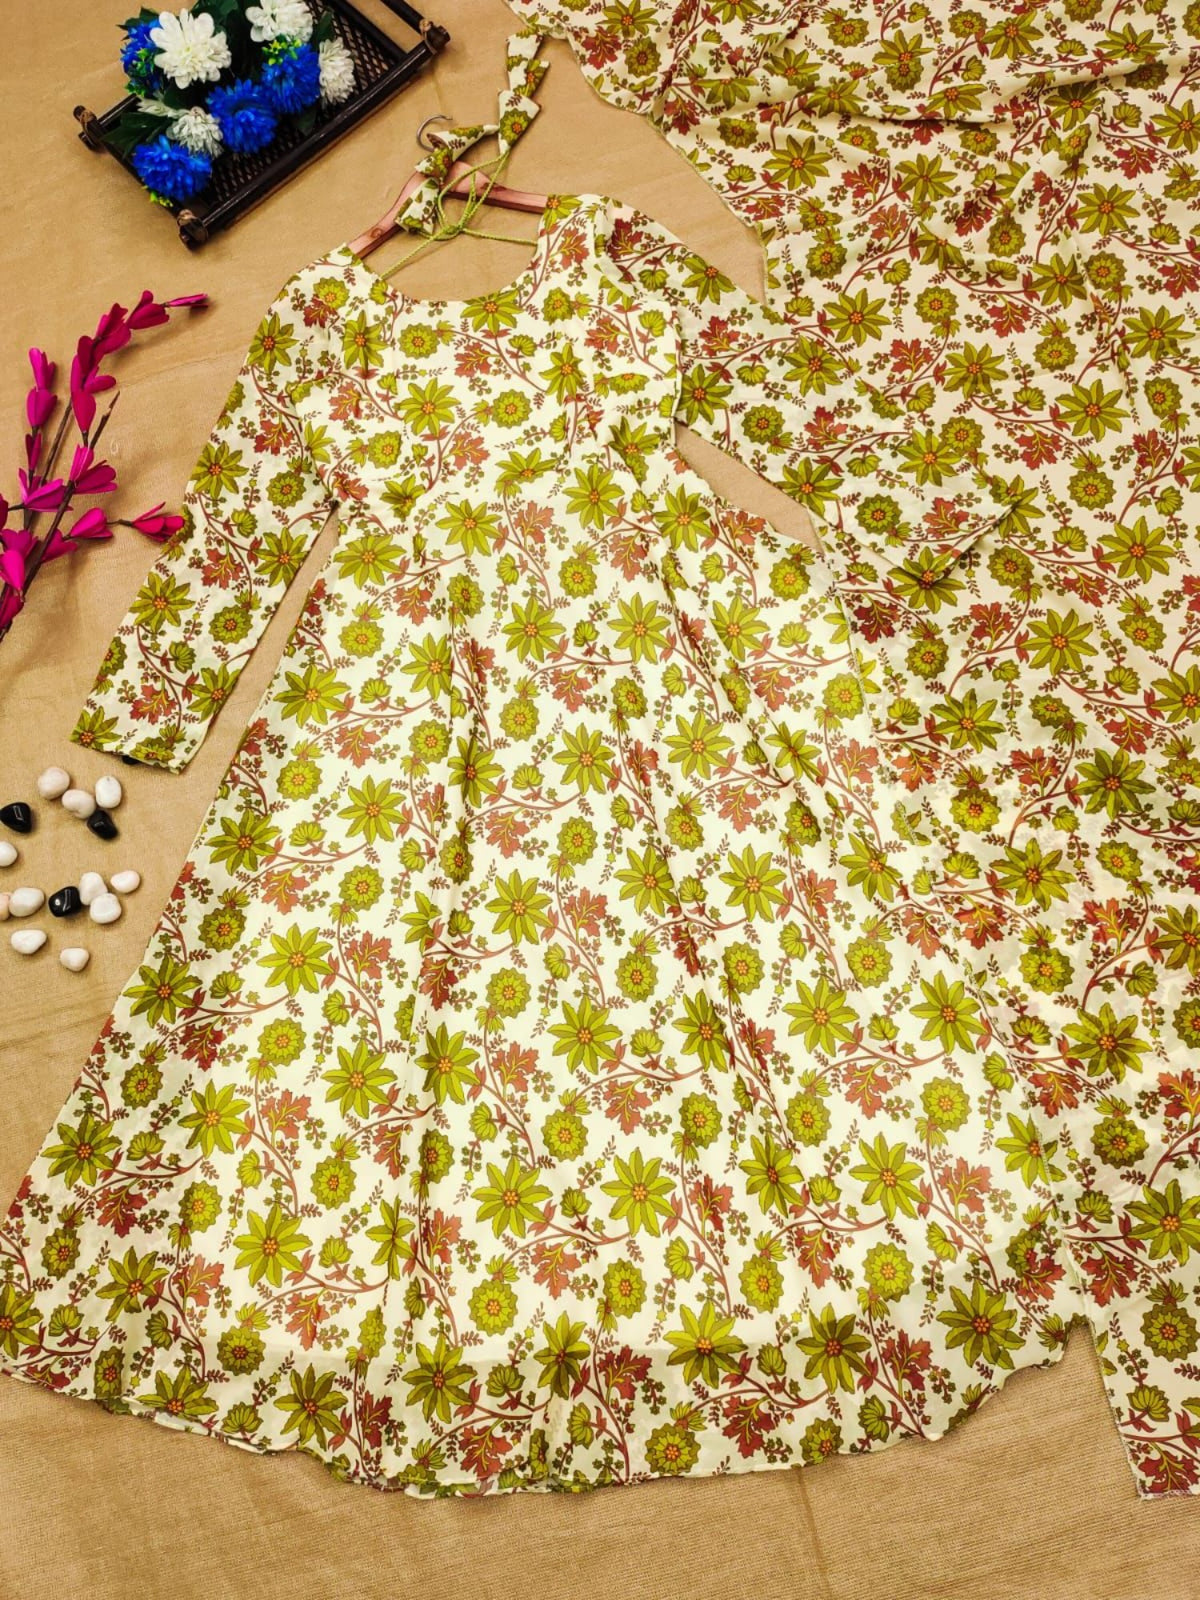 Bollywood Indian Pakistani Ethnic Party Wear Women Soft Pure Faux Georgette Floral Suit Kurta & Dupatta Dress